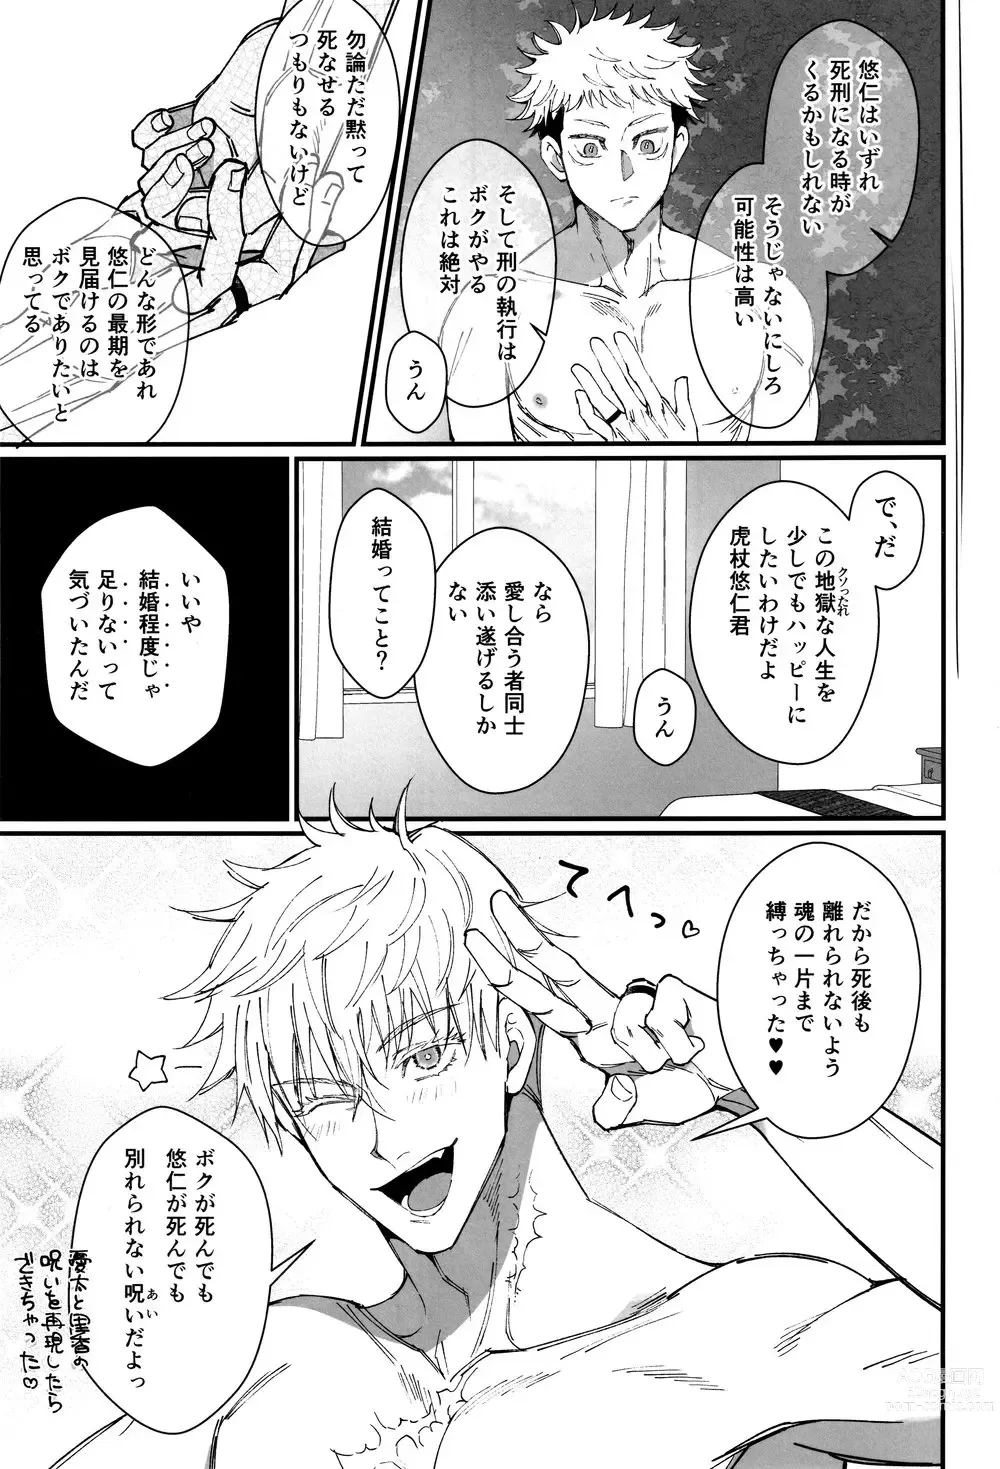 Page 30 of doujinshi Zoku Gachikoi Monster